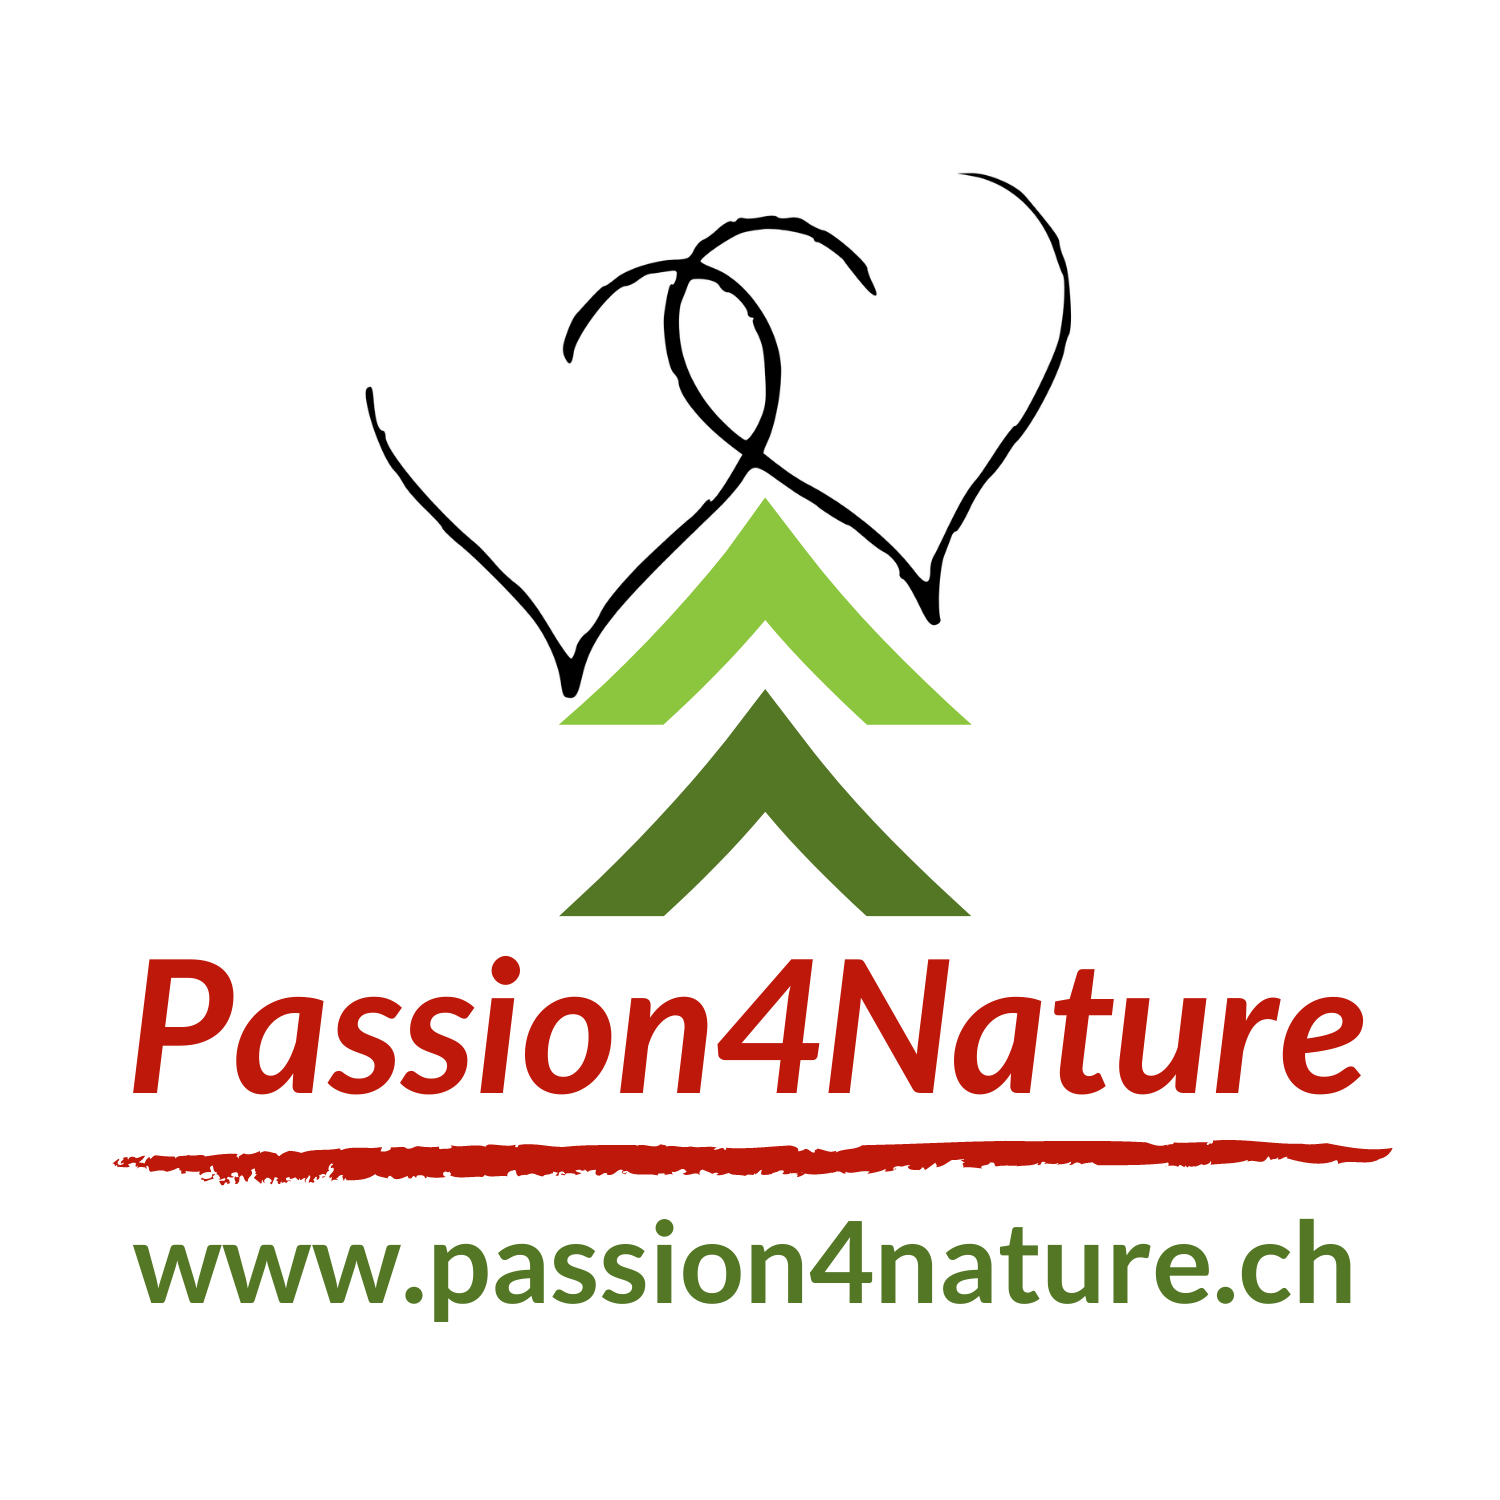 Passion4nature